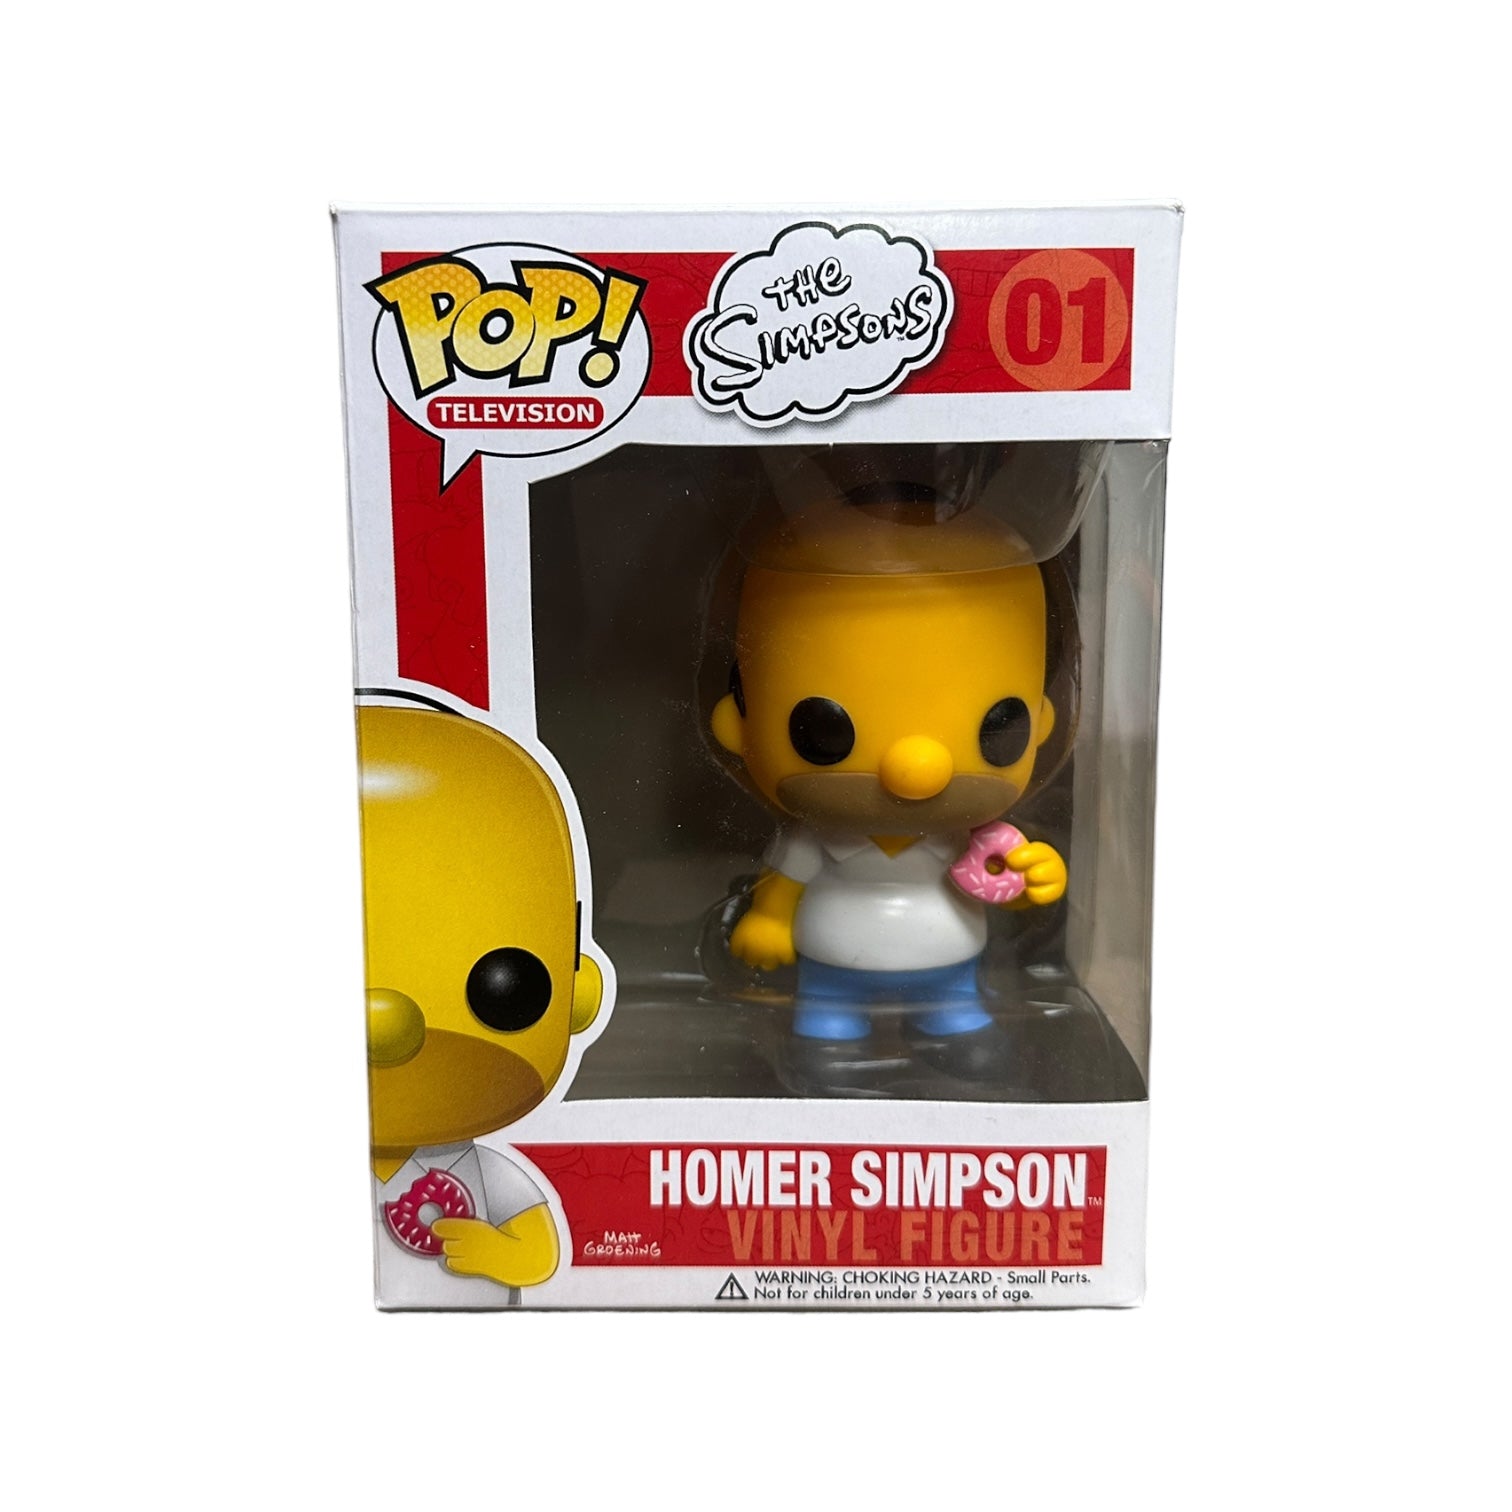 Homer Simpson #01 Funko Pop! - The Simpsons - 2011 Pop! - Condition 7.5/10